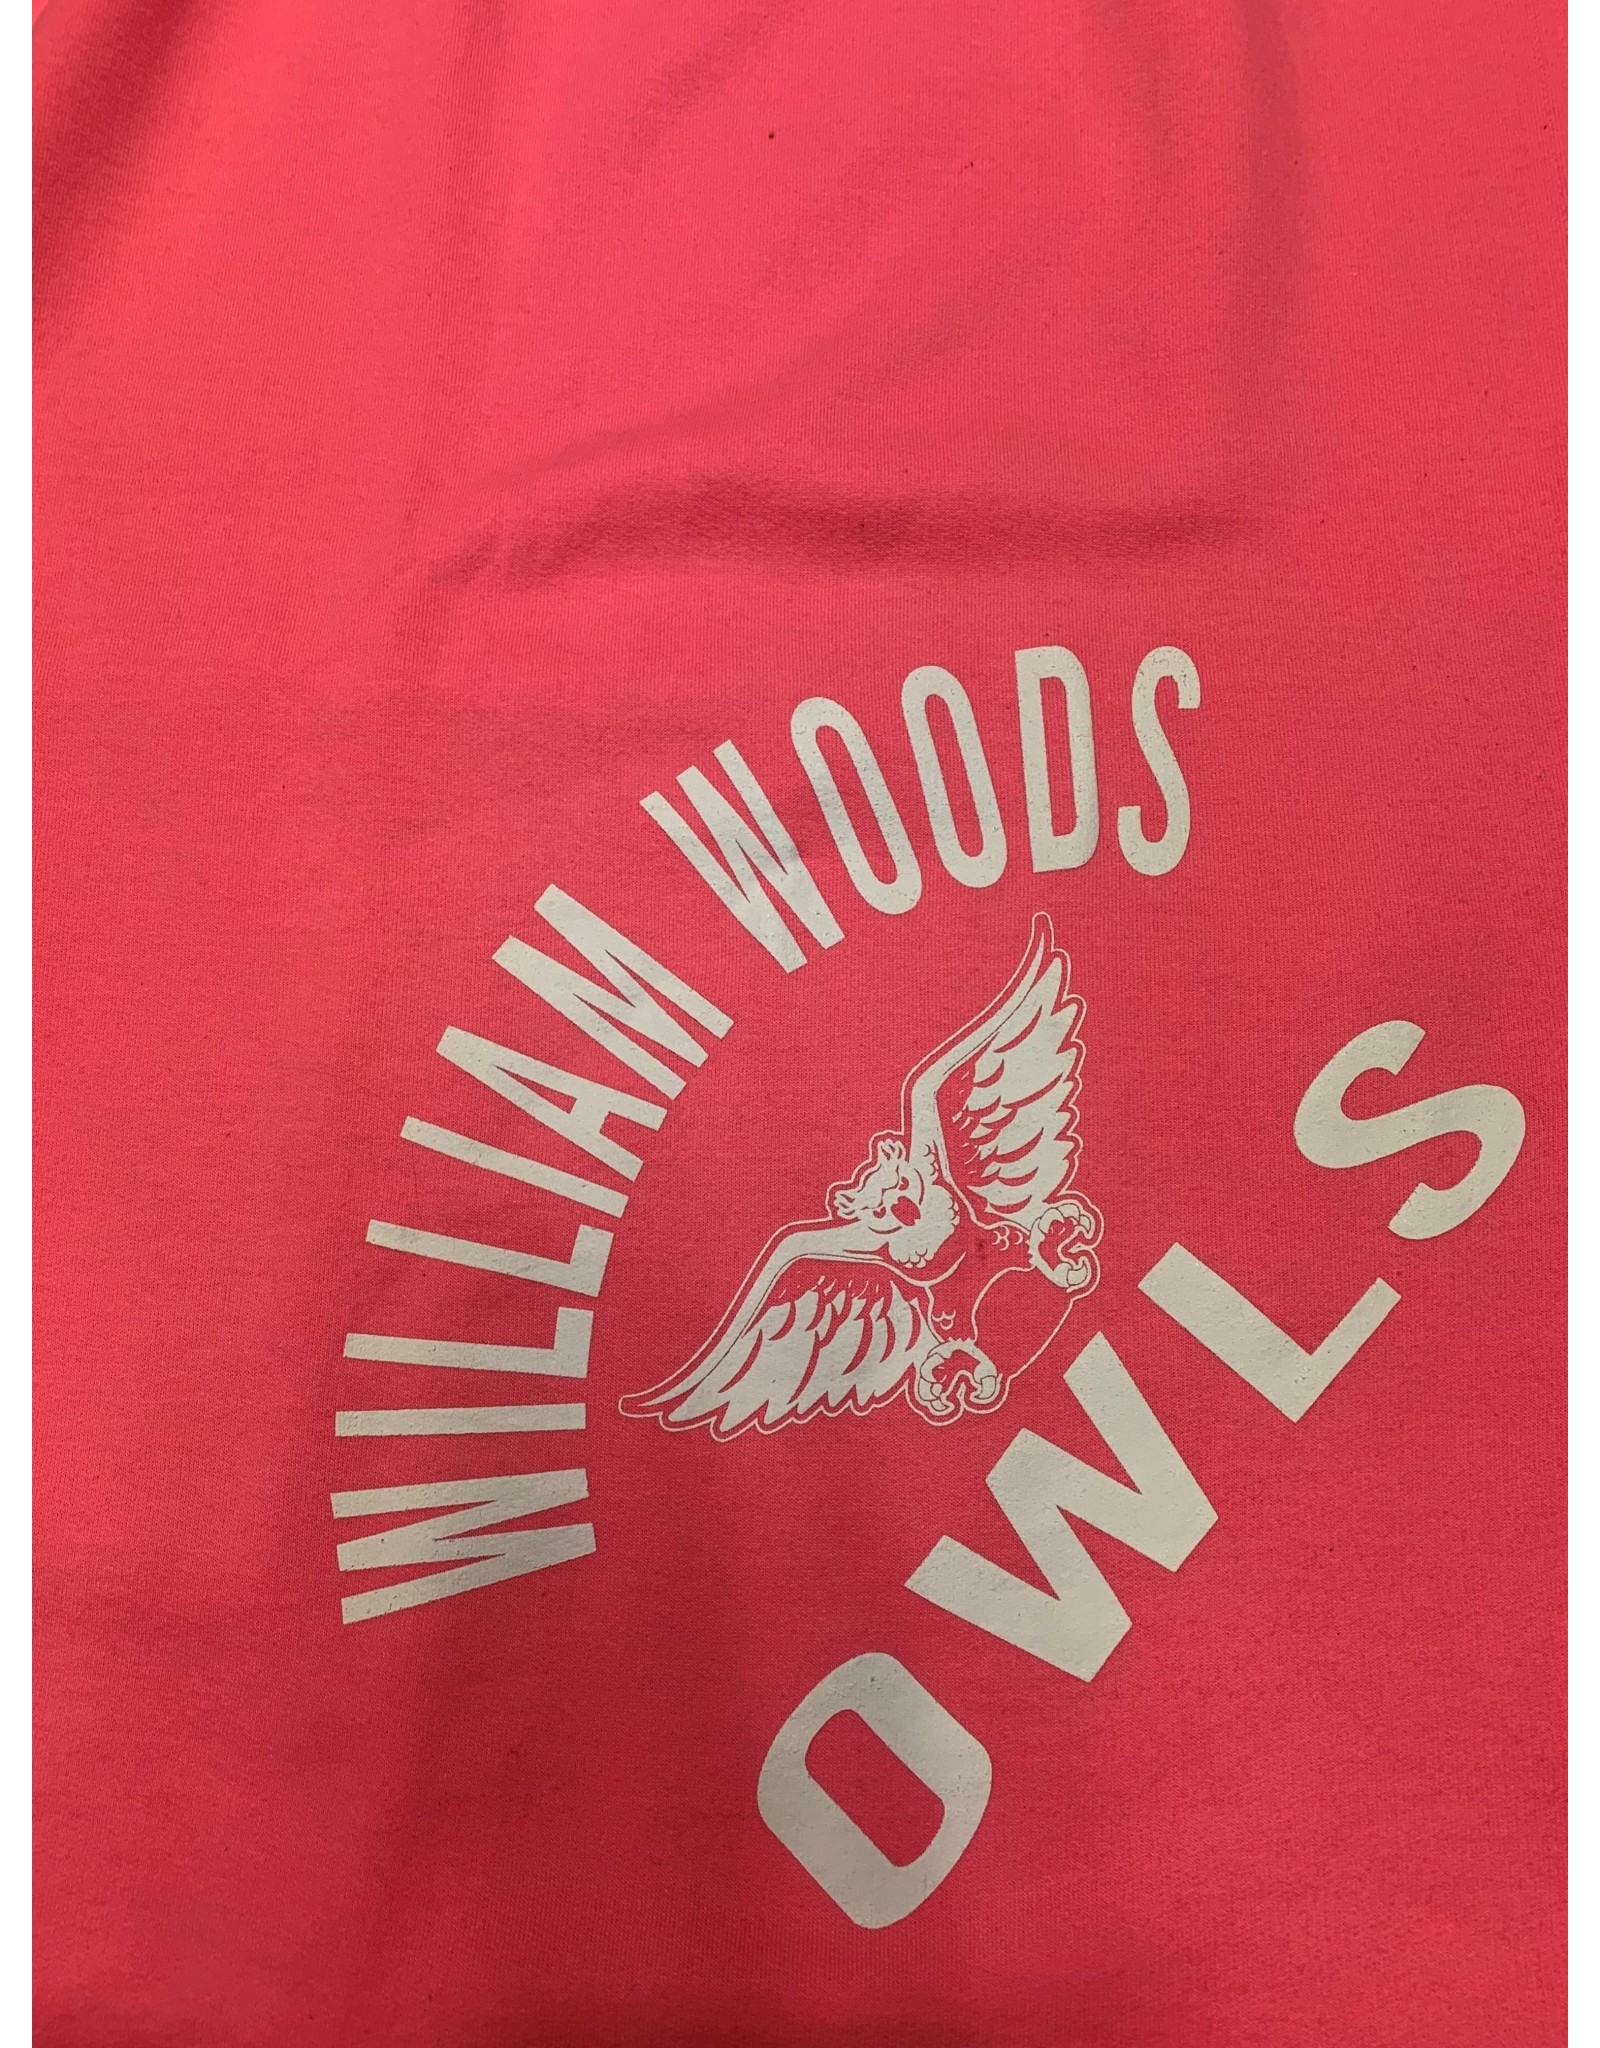 William Woods Owls (mascot) Sweatshirt blanket